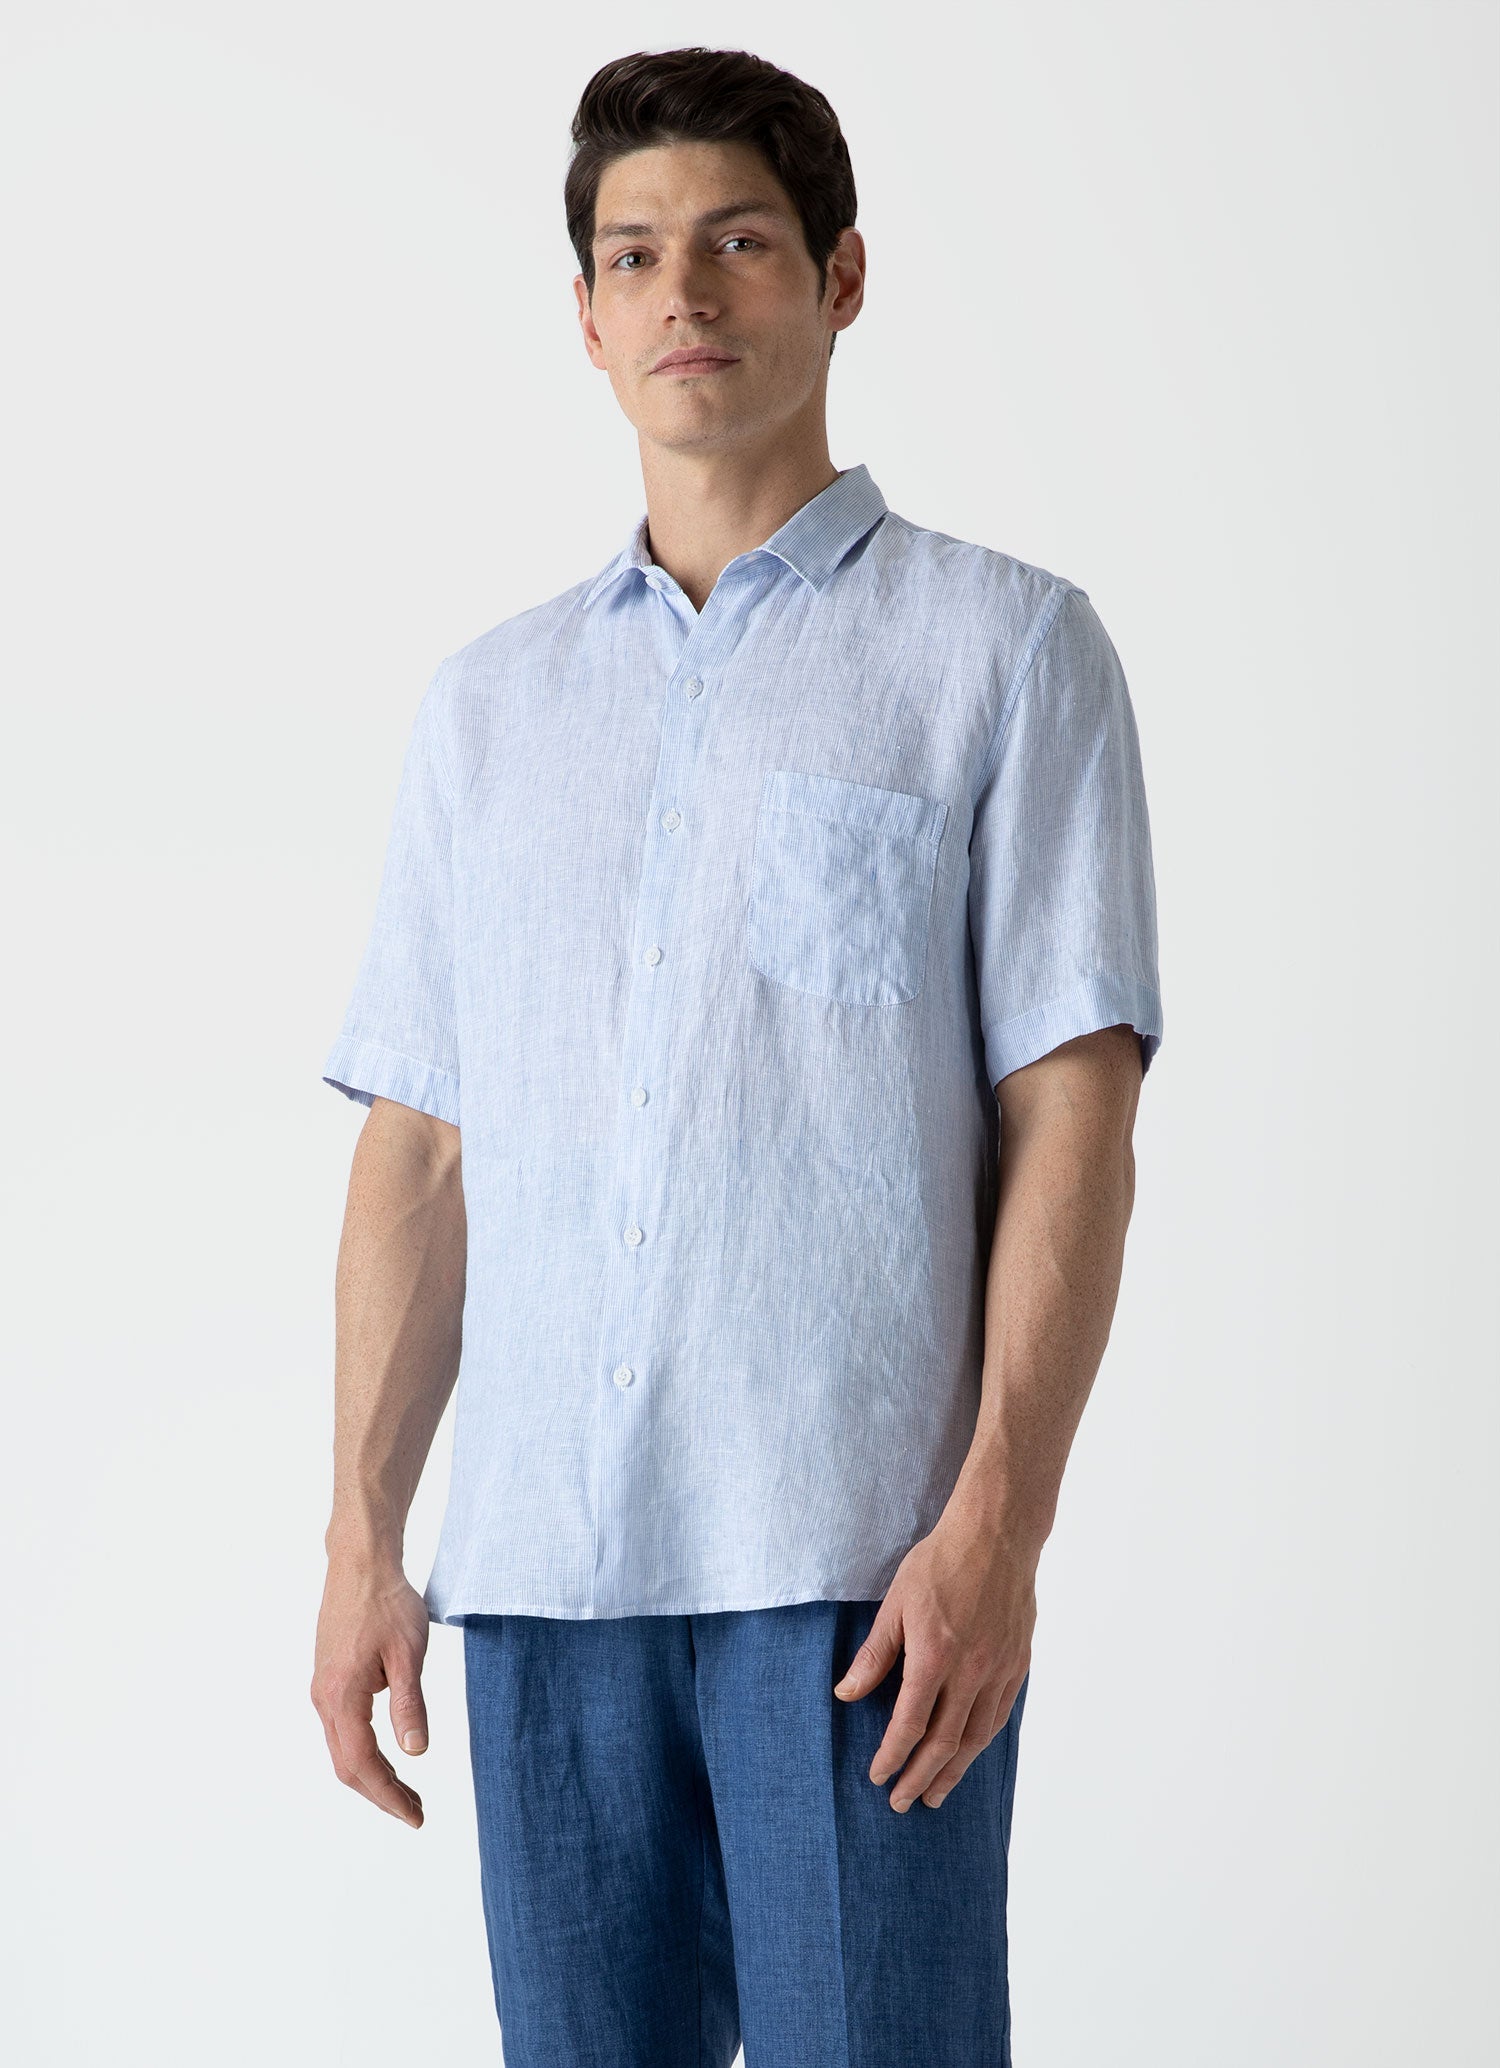 Men's Short Sleeve Linen Shirt in Cool Blue Micro Stripe